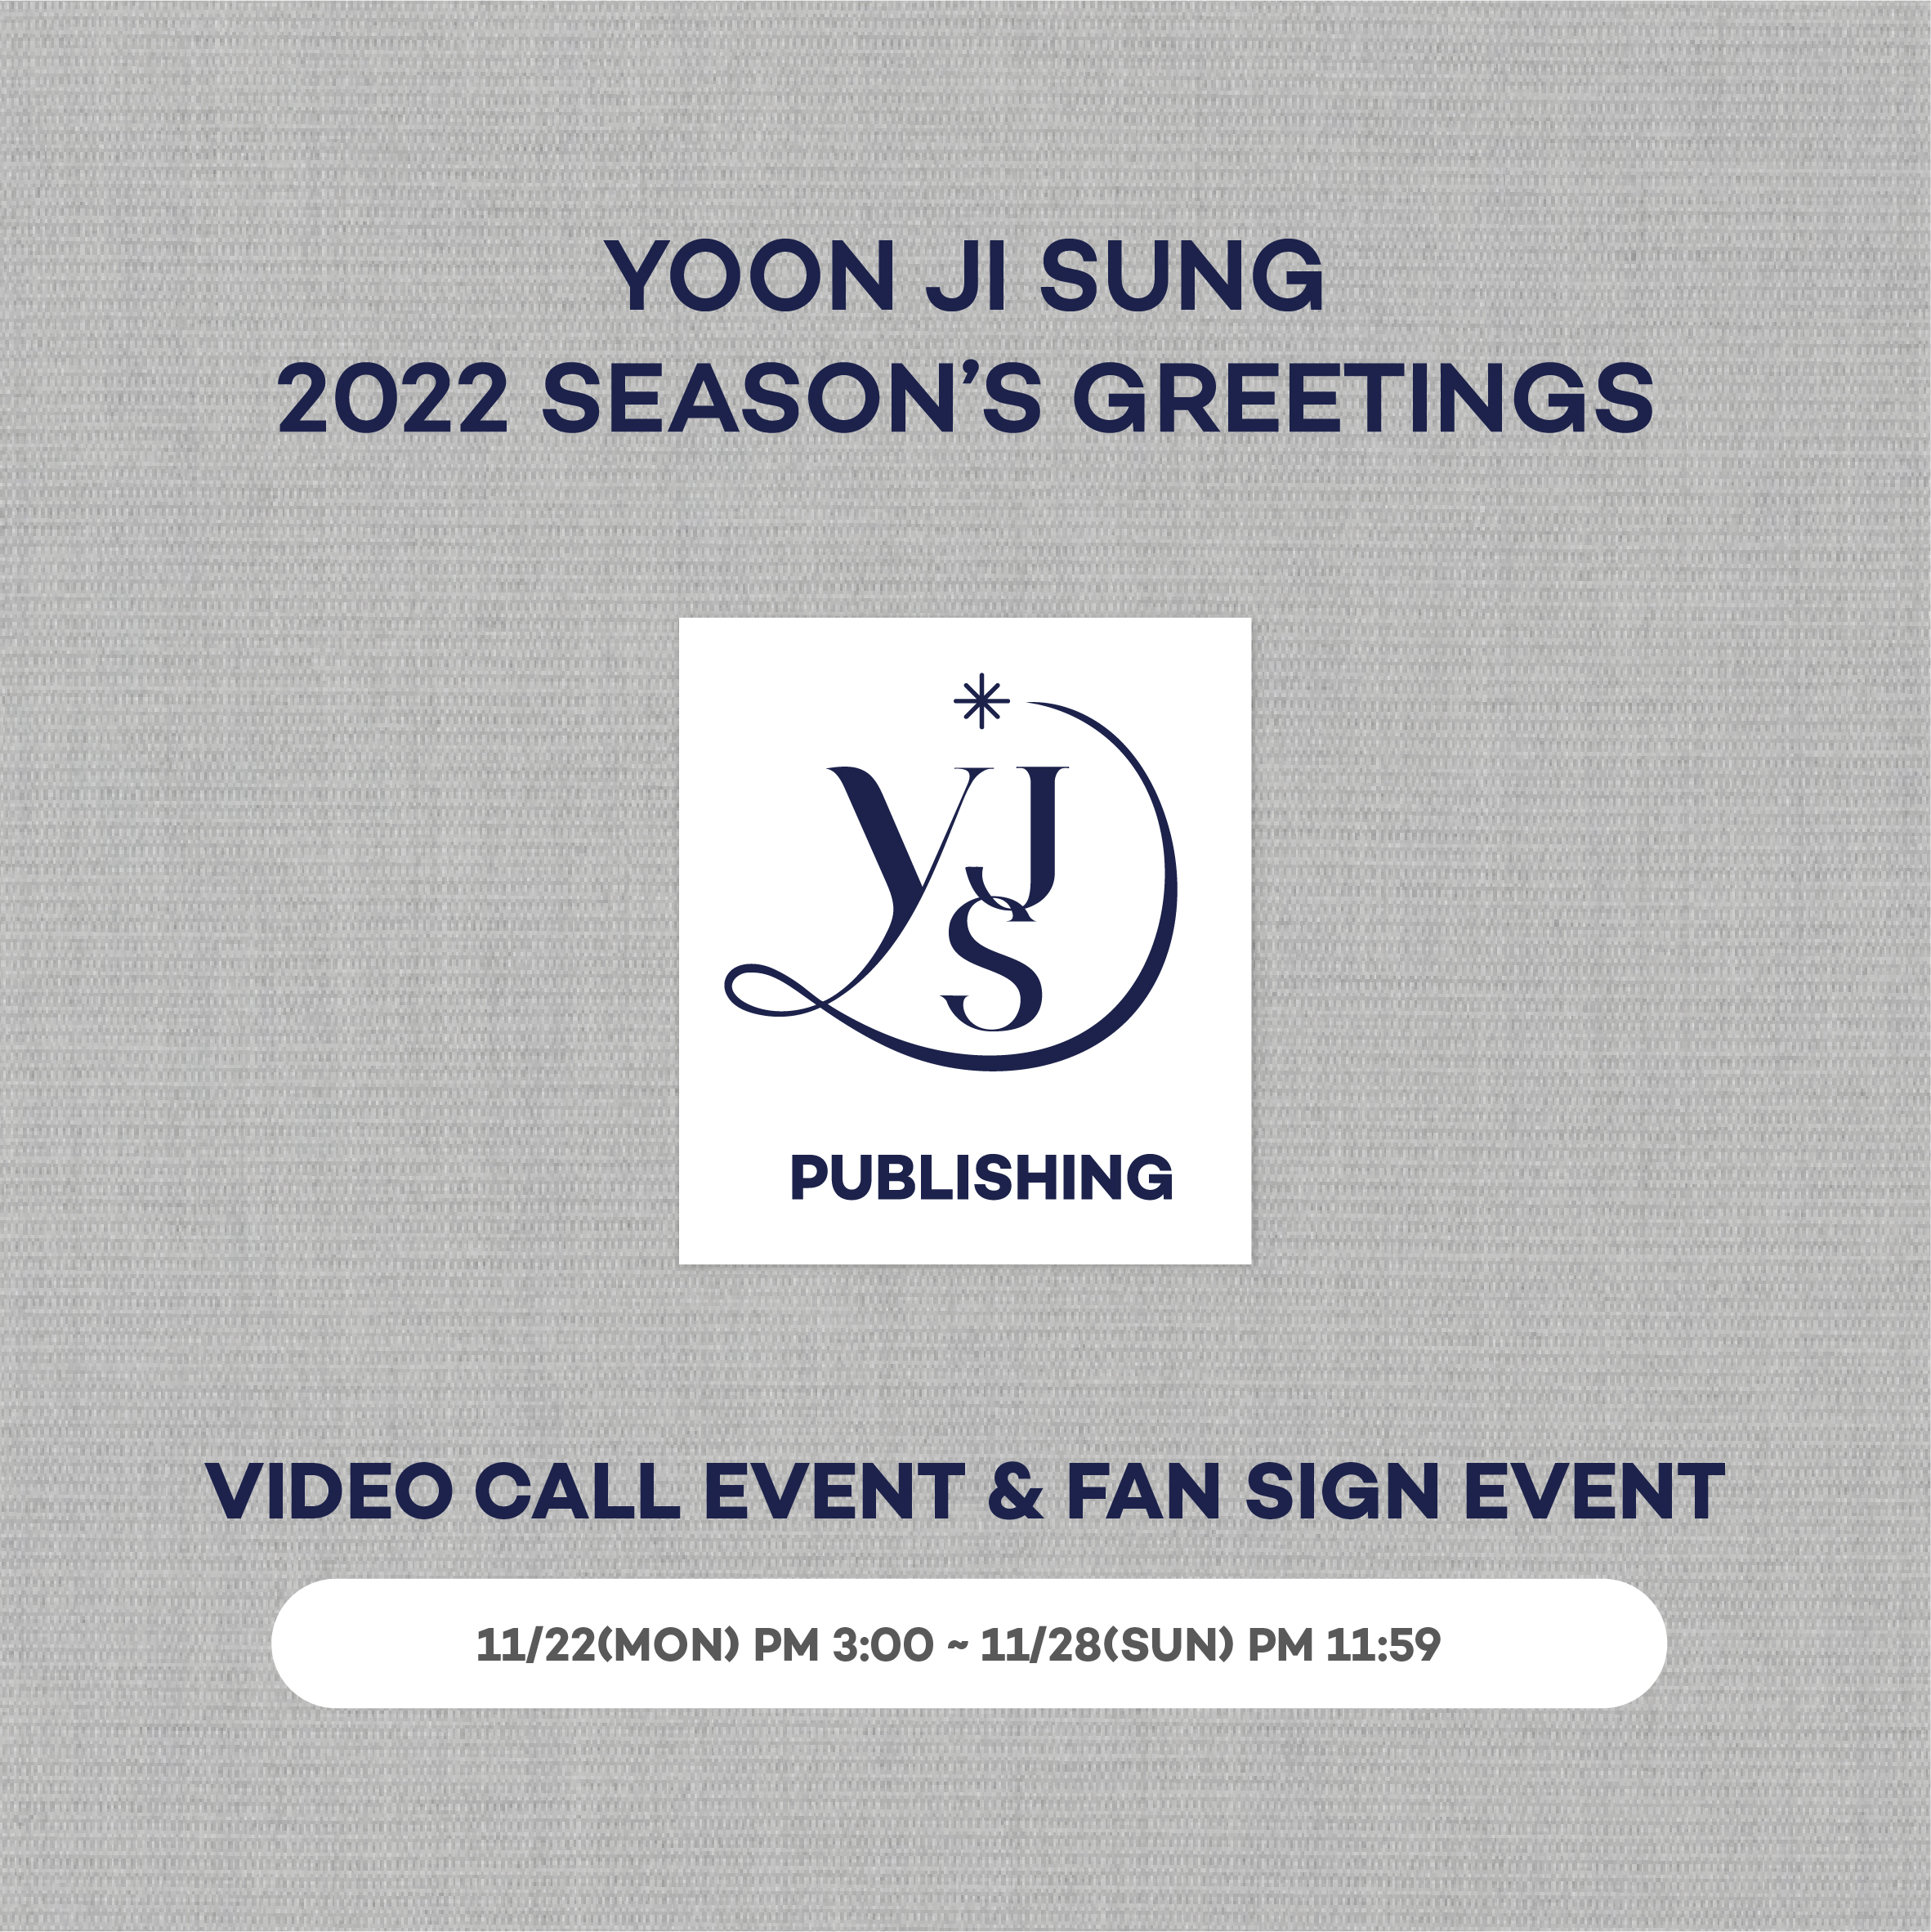 YOON JI SUNG SEASON'S GREETINGS VIDEO CALL EVENT